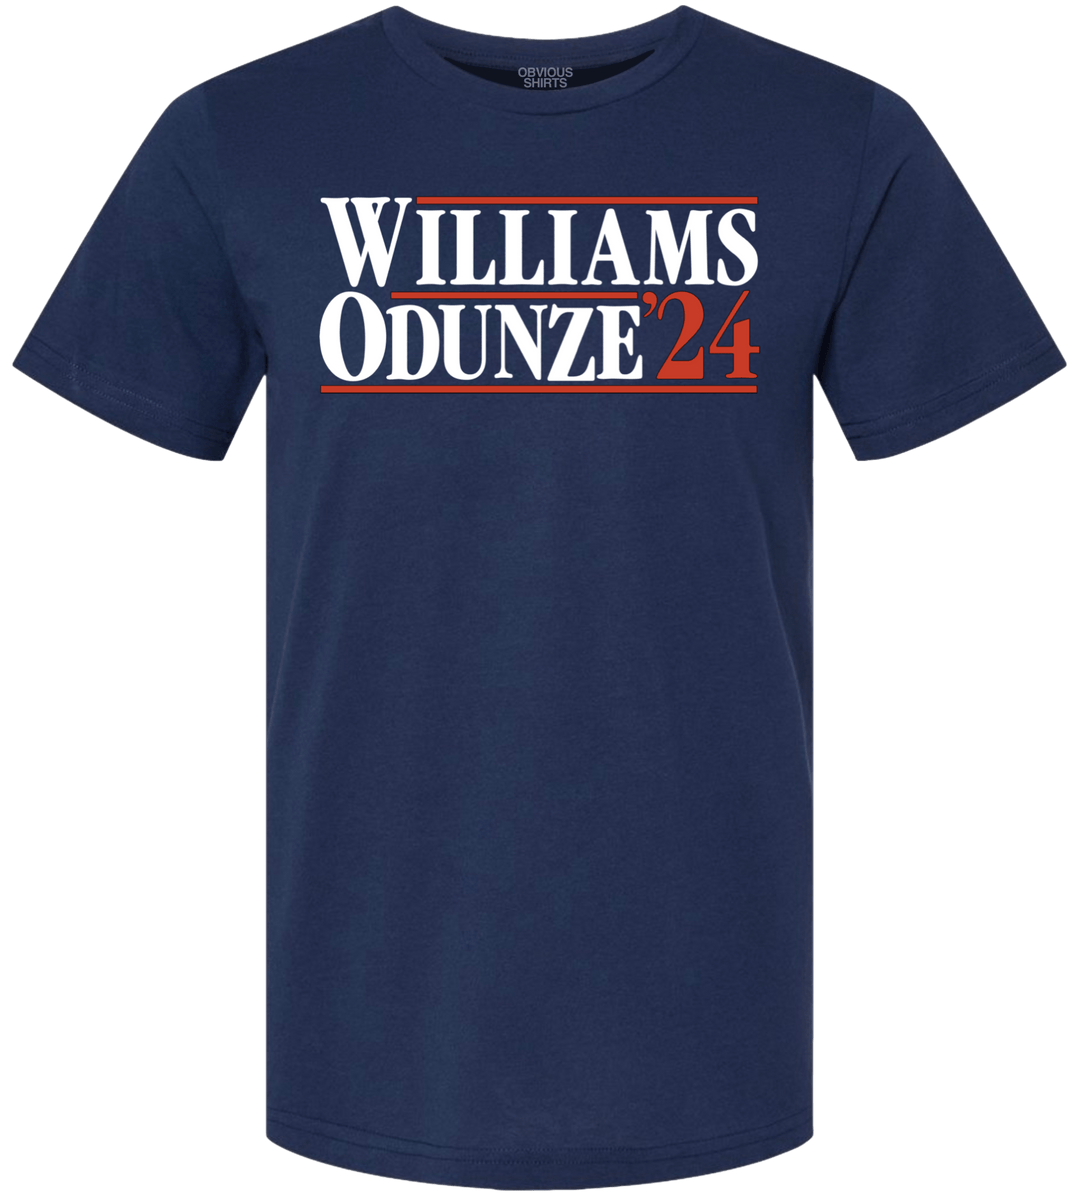 WILLIAMS ODUNZE 2024 - OBVIOUS SHIRTS